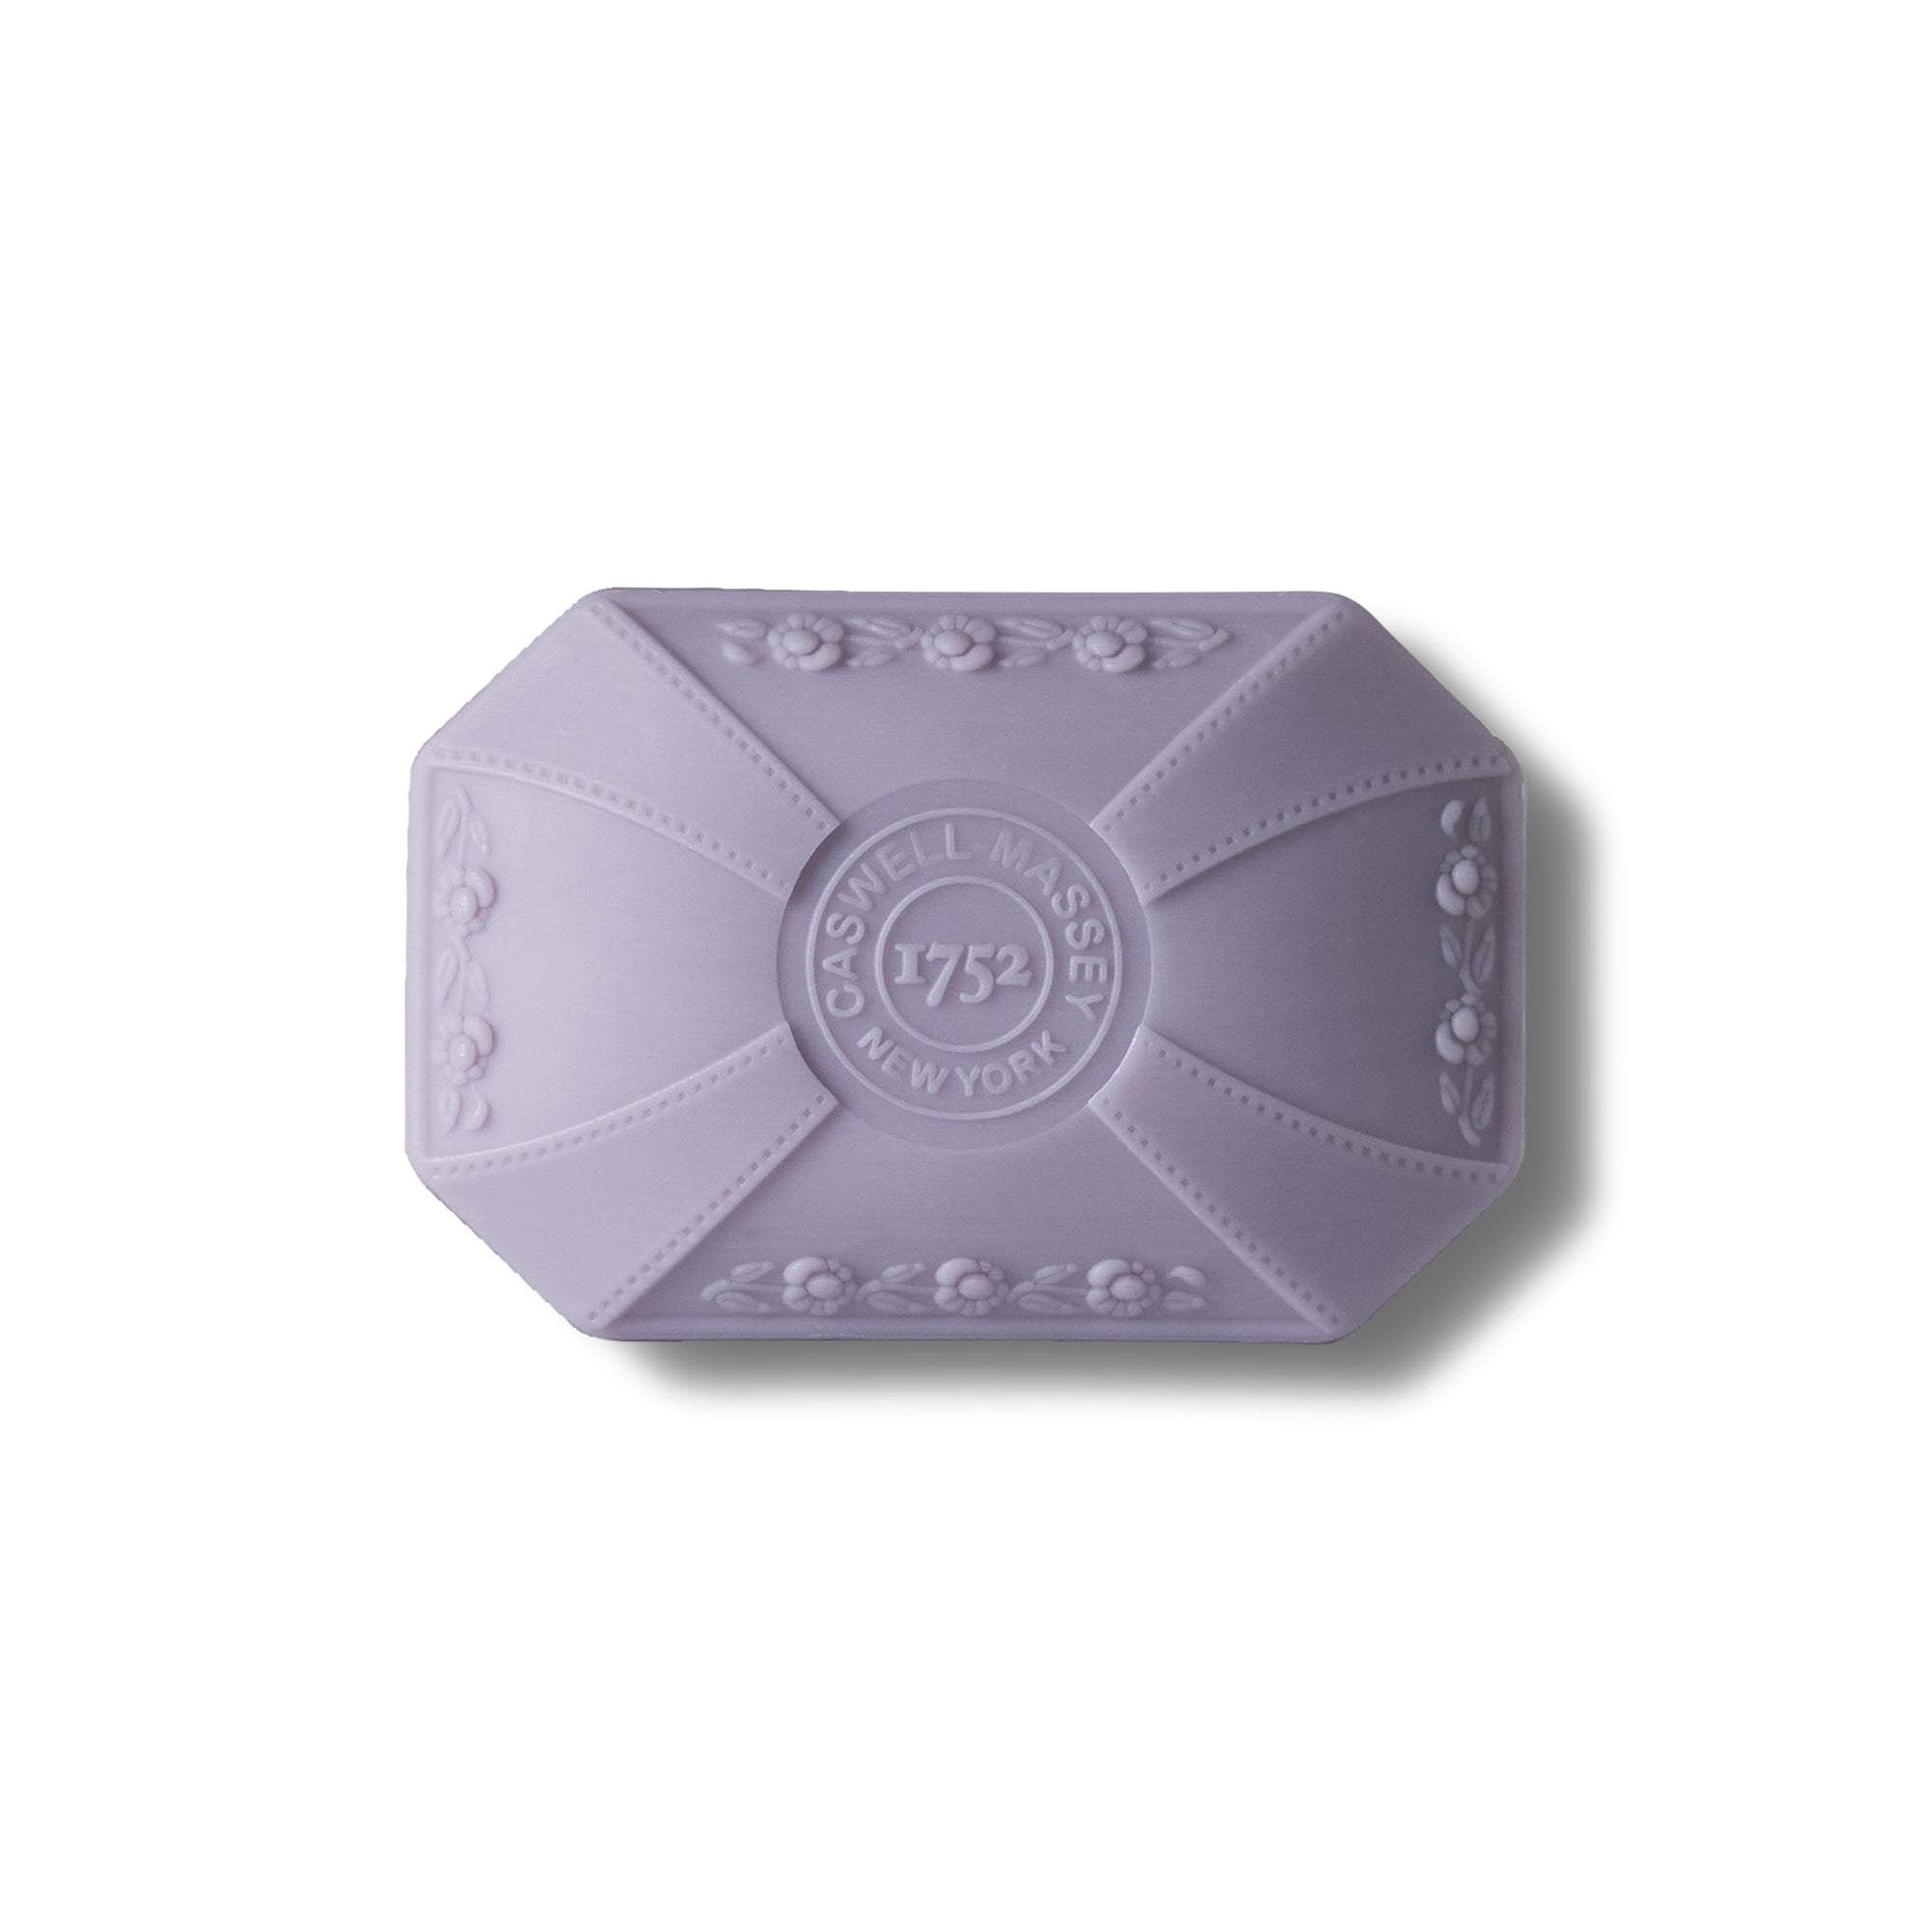 Caswell-Massey Orchid Bath Soap, light purple decorative bar soap